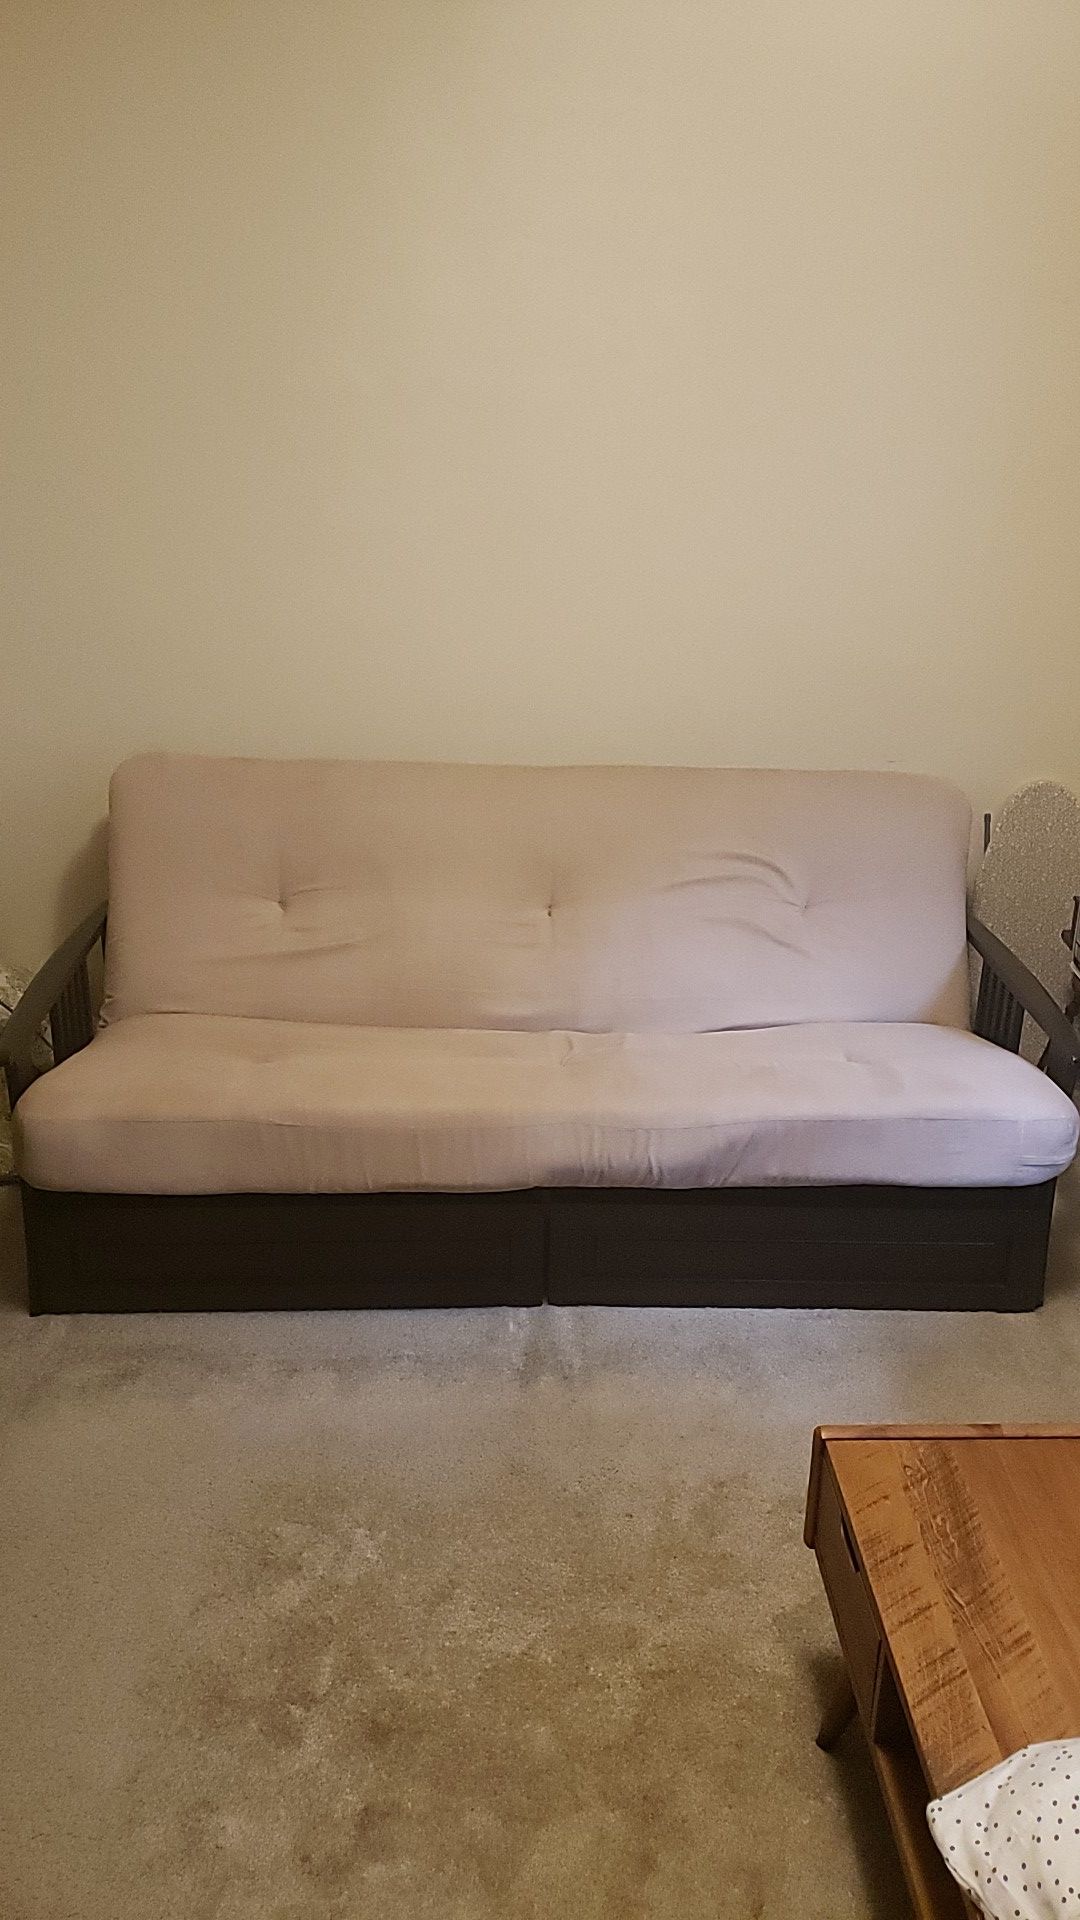 Futon frame and mattress